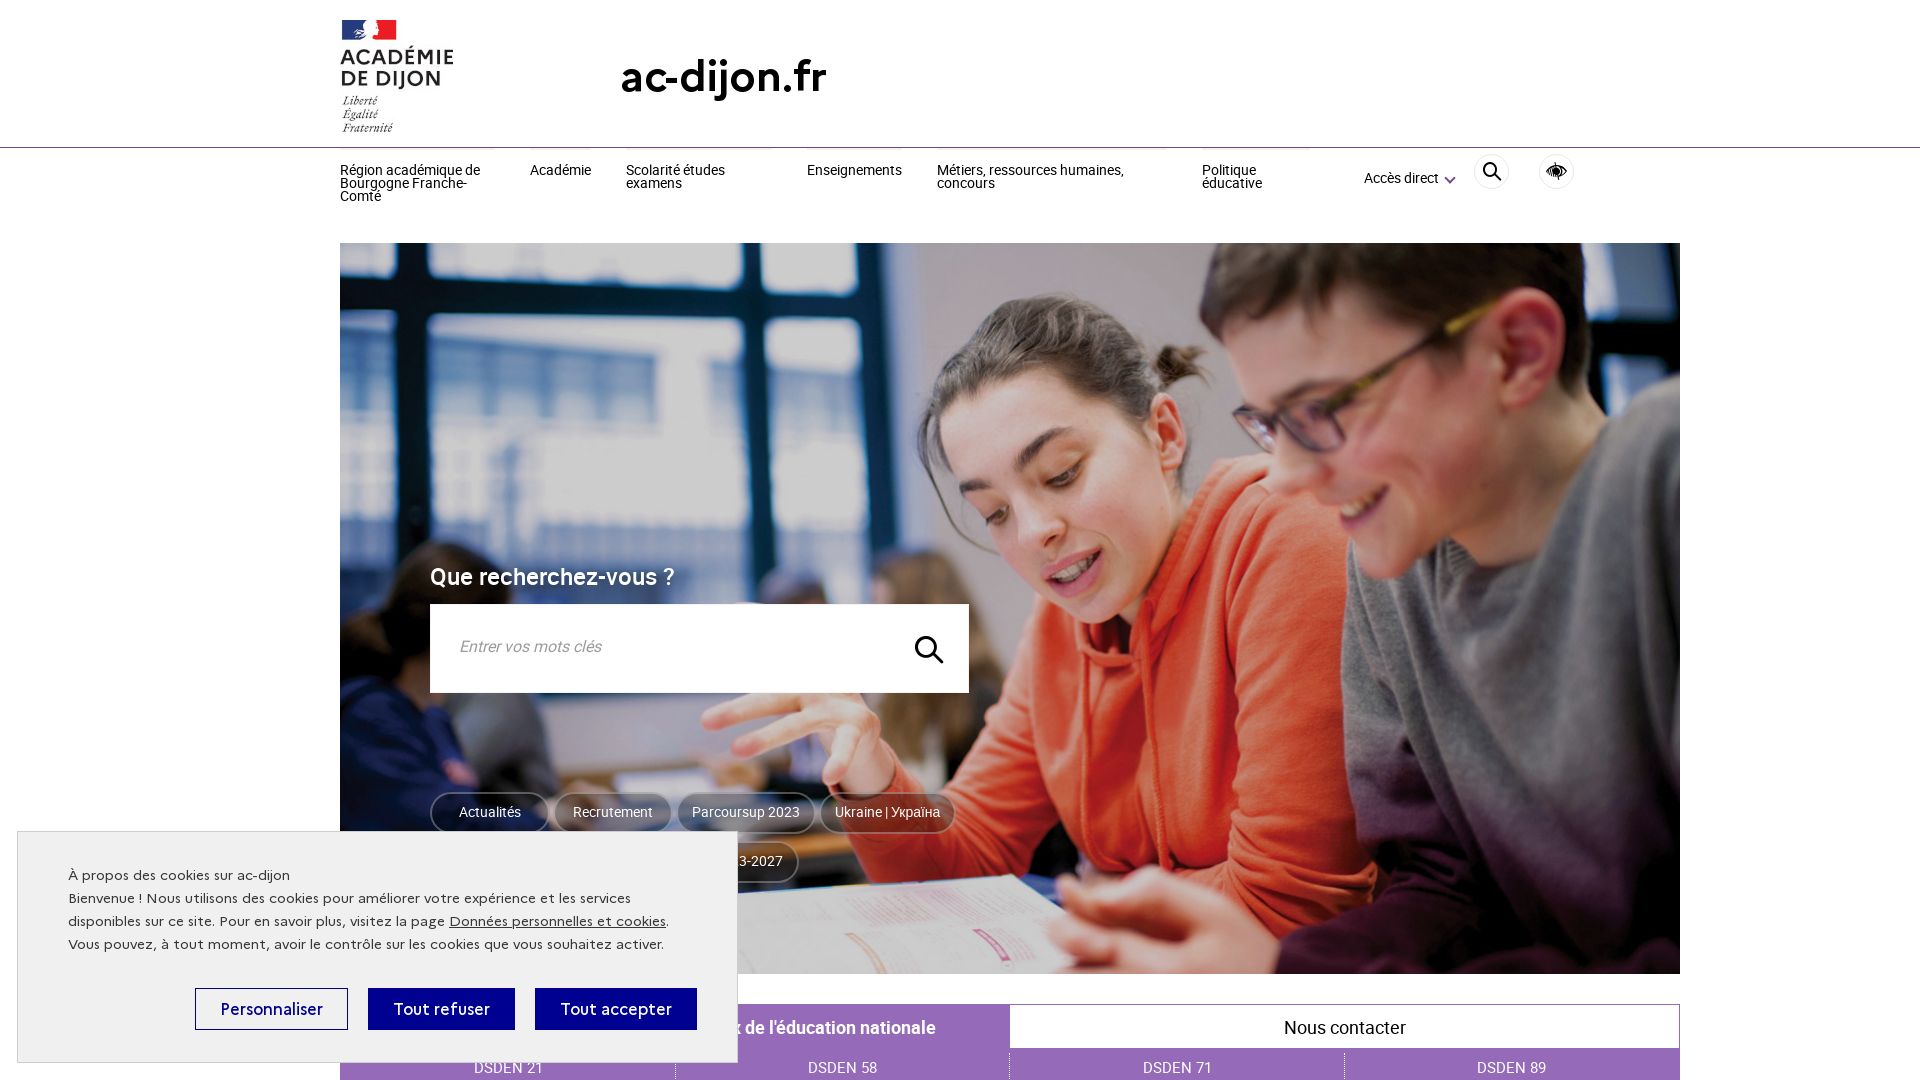 Website status ac-dijon.fr is   ONLINE